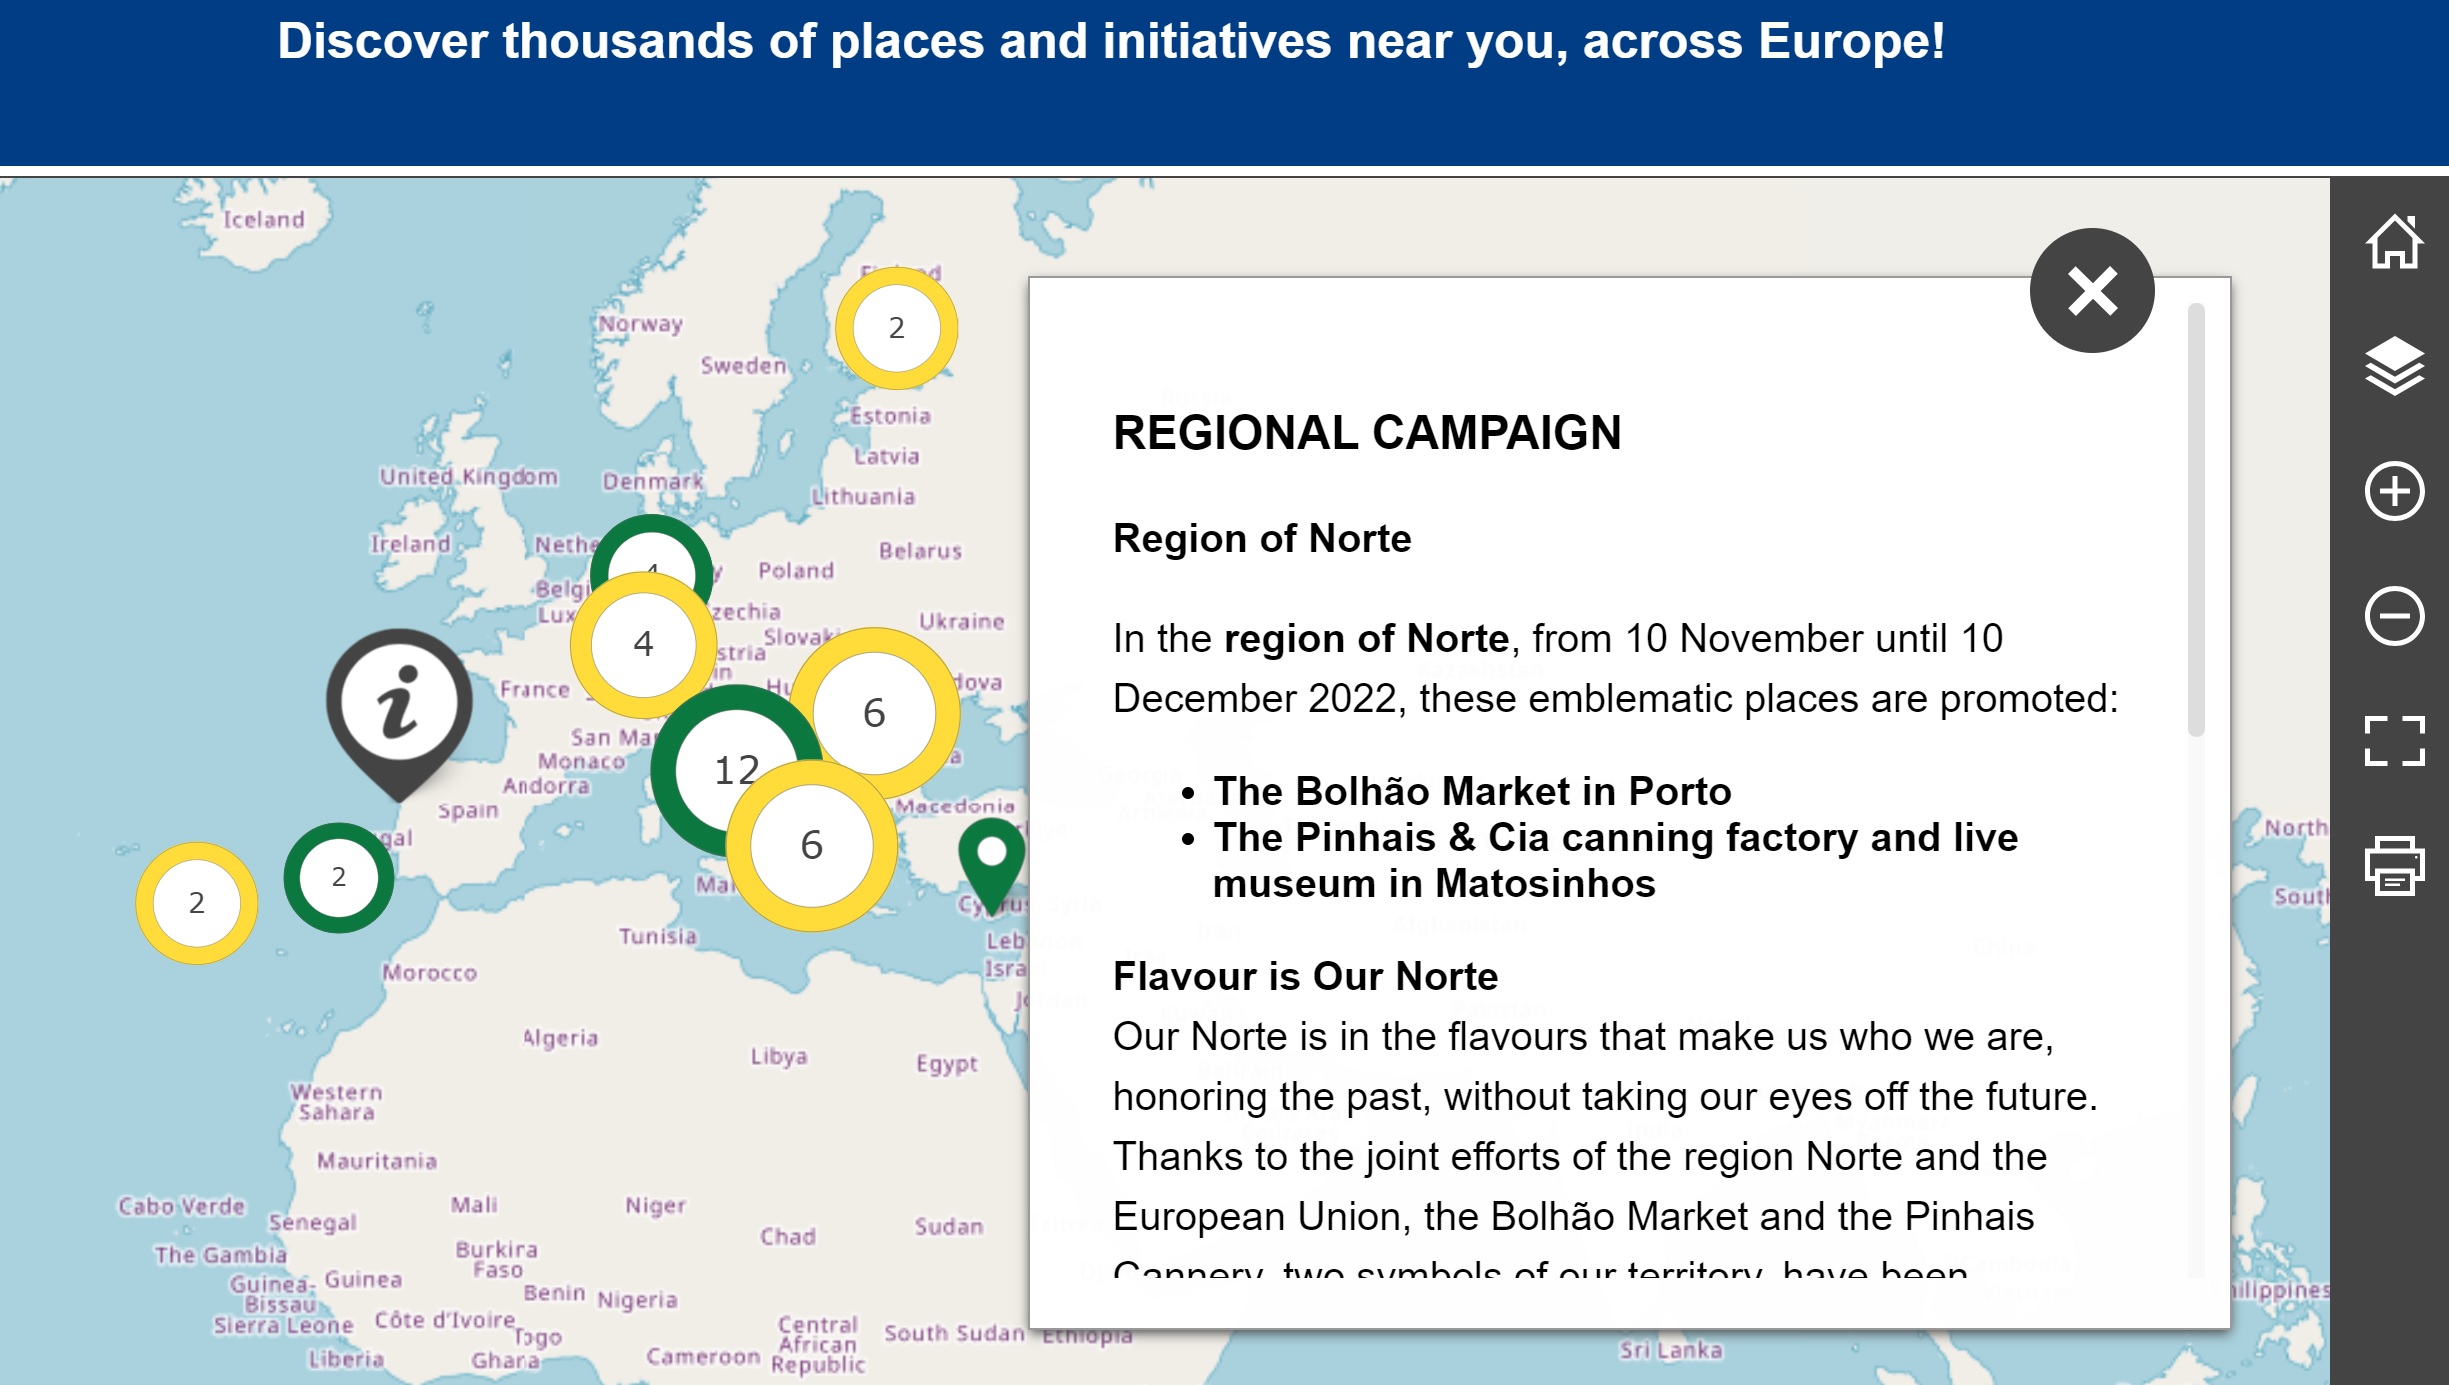 Europe in my region campaign (DG Regio)